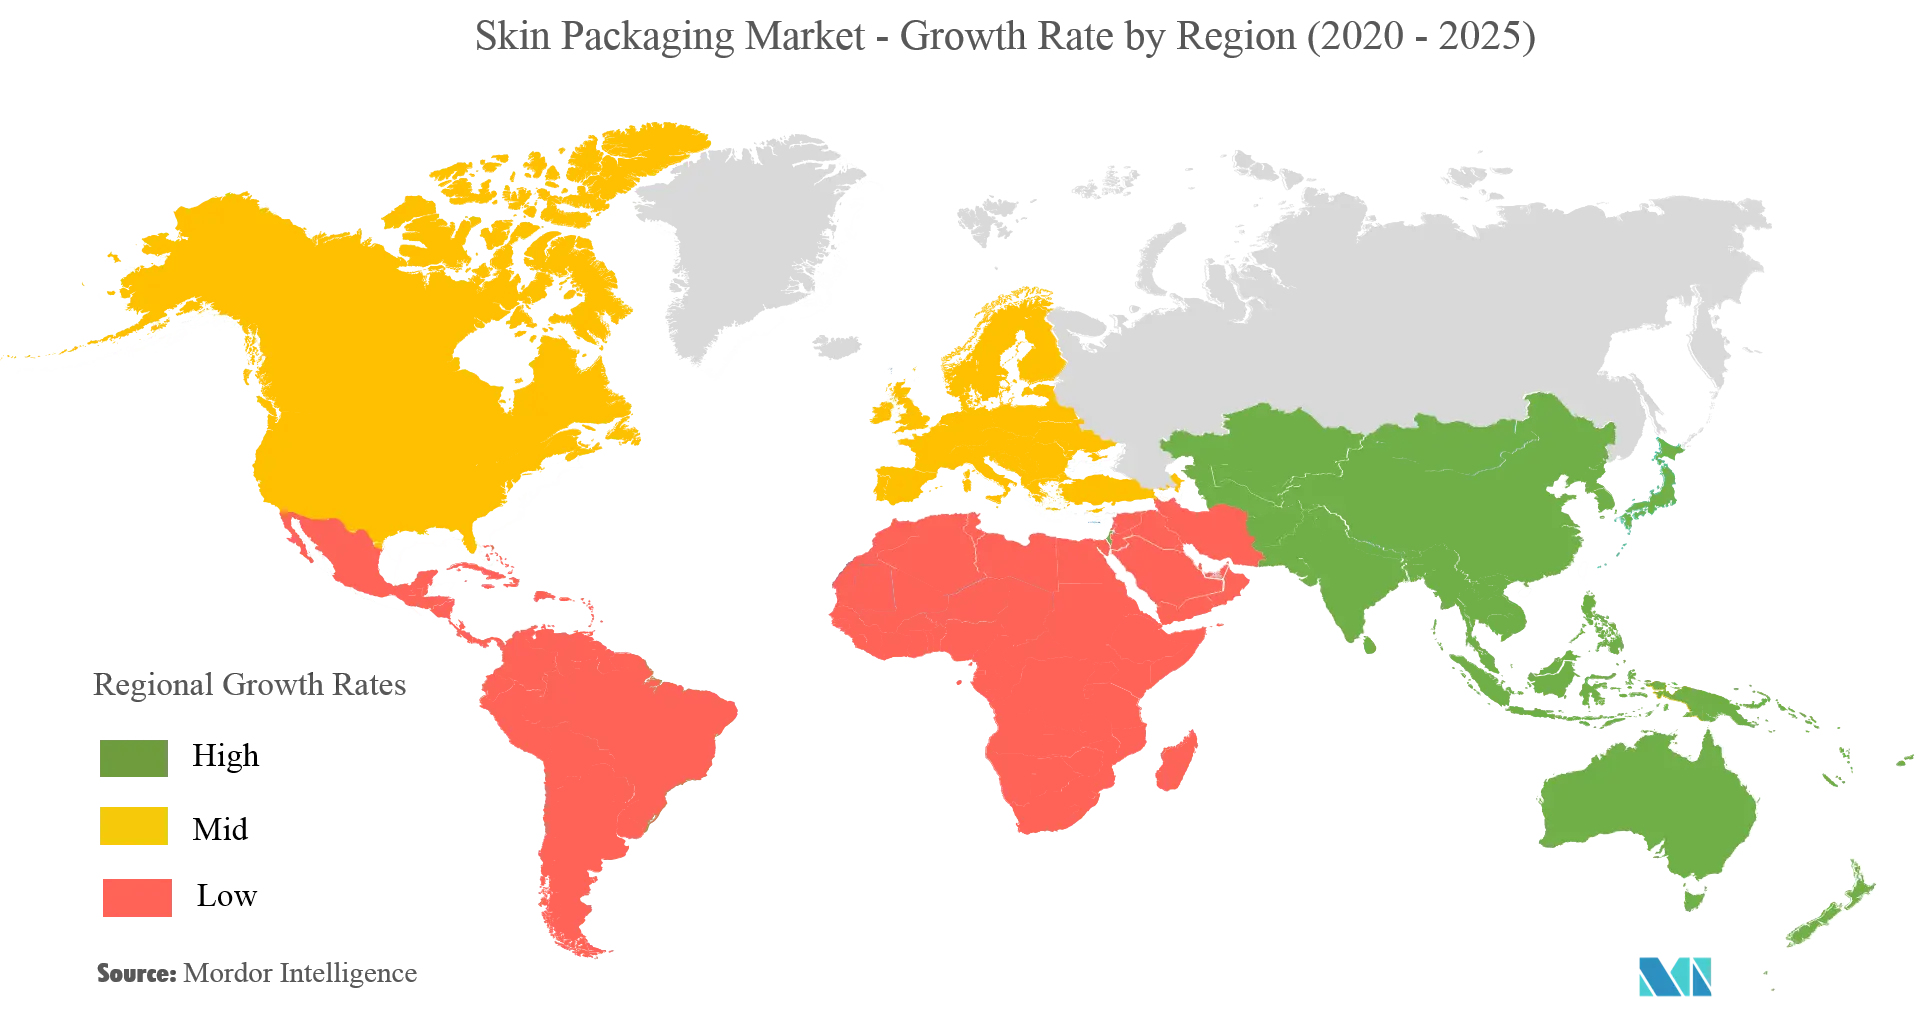 Skin Packaging Market - Growth Rate by Region (2020 - 2025)